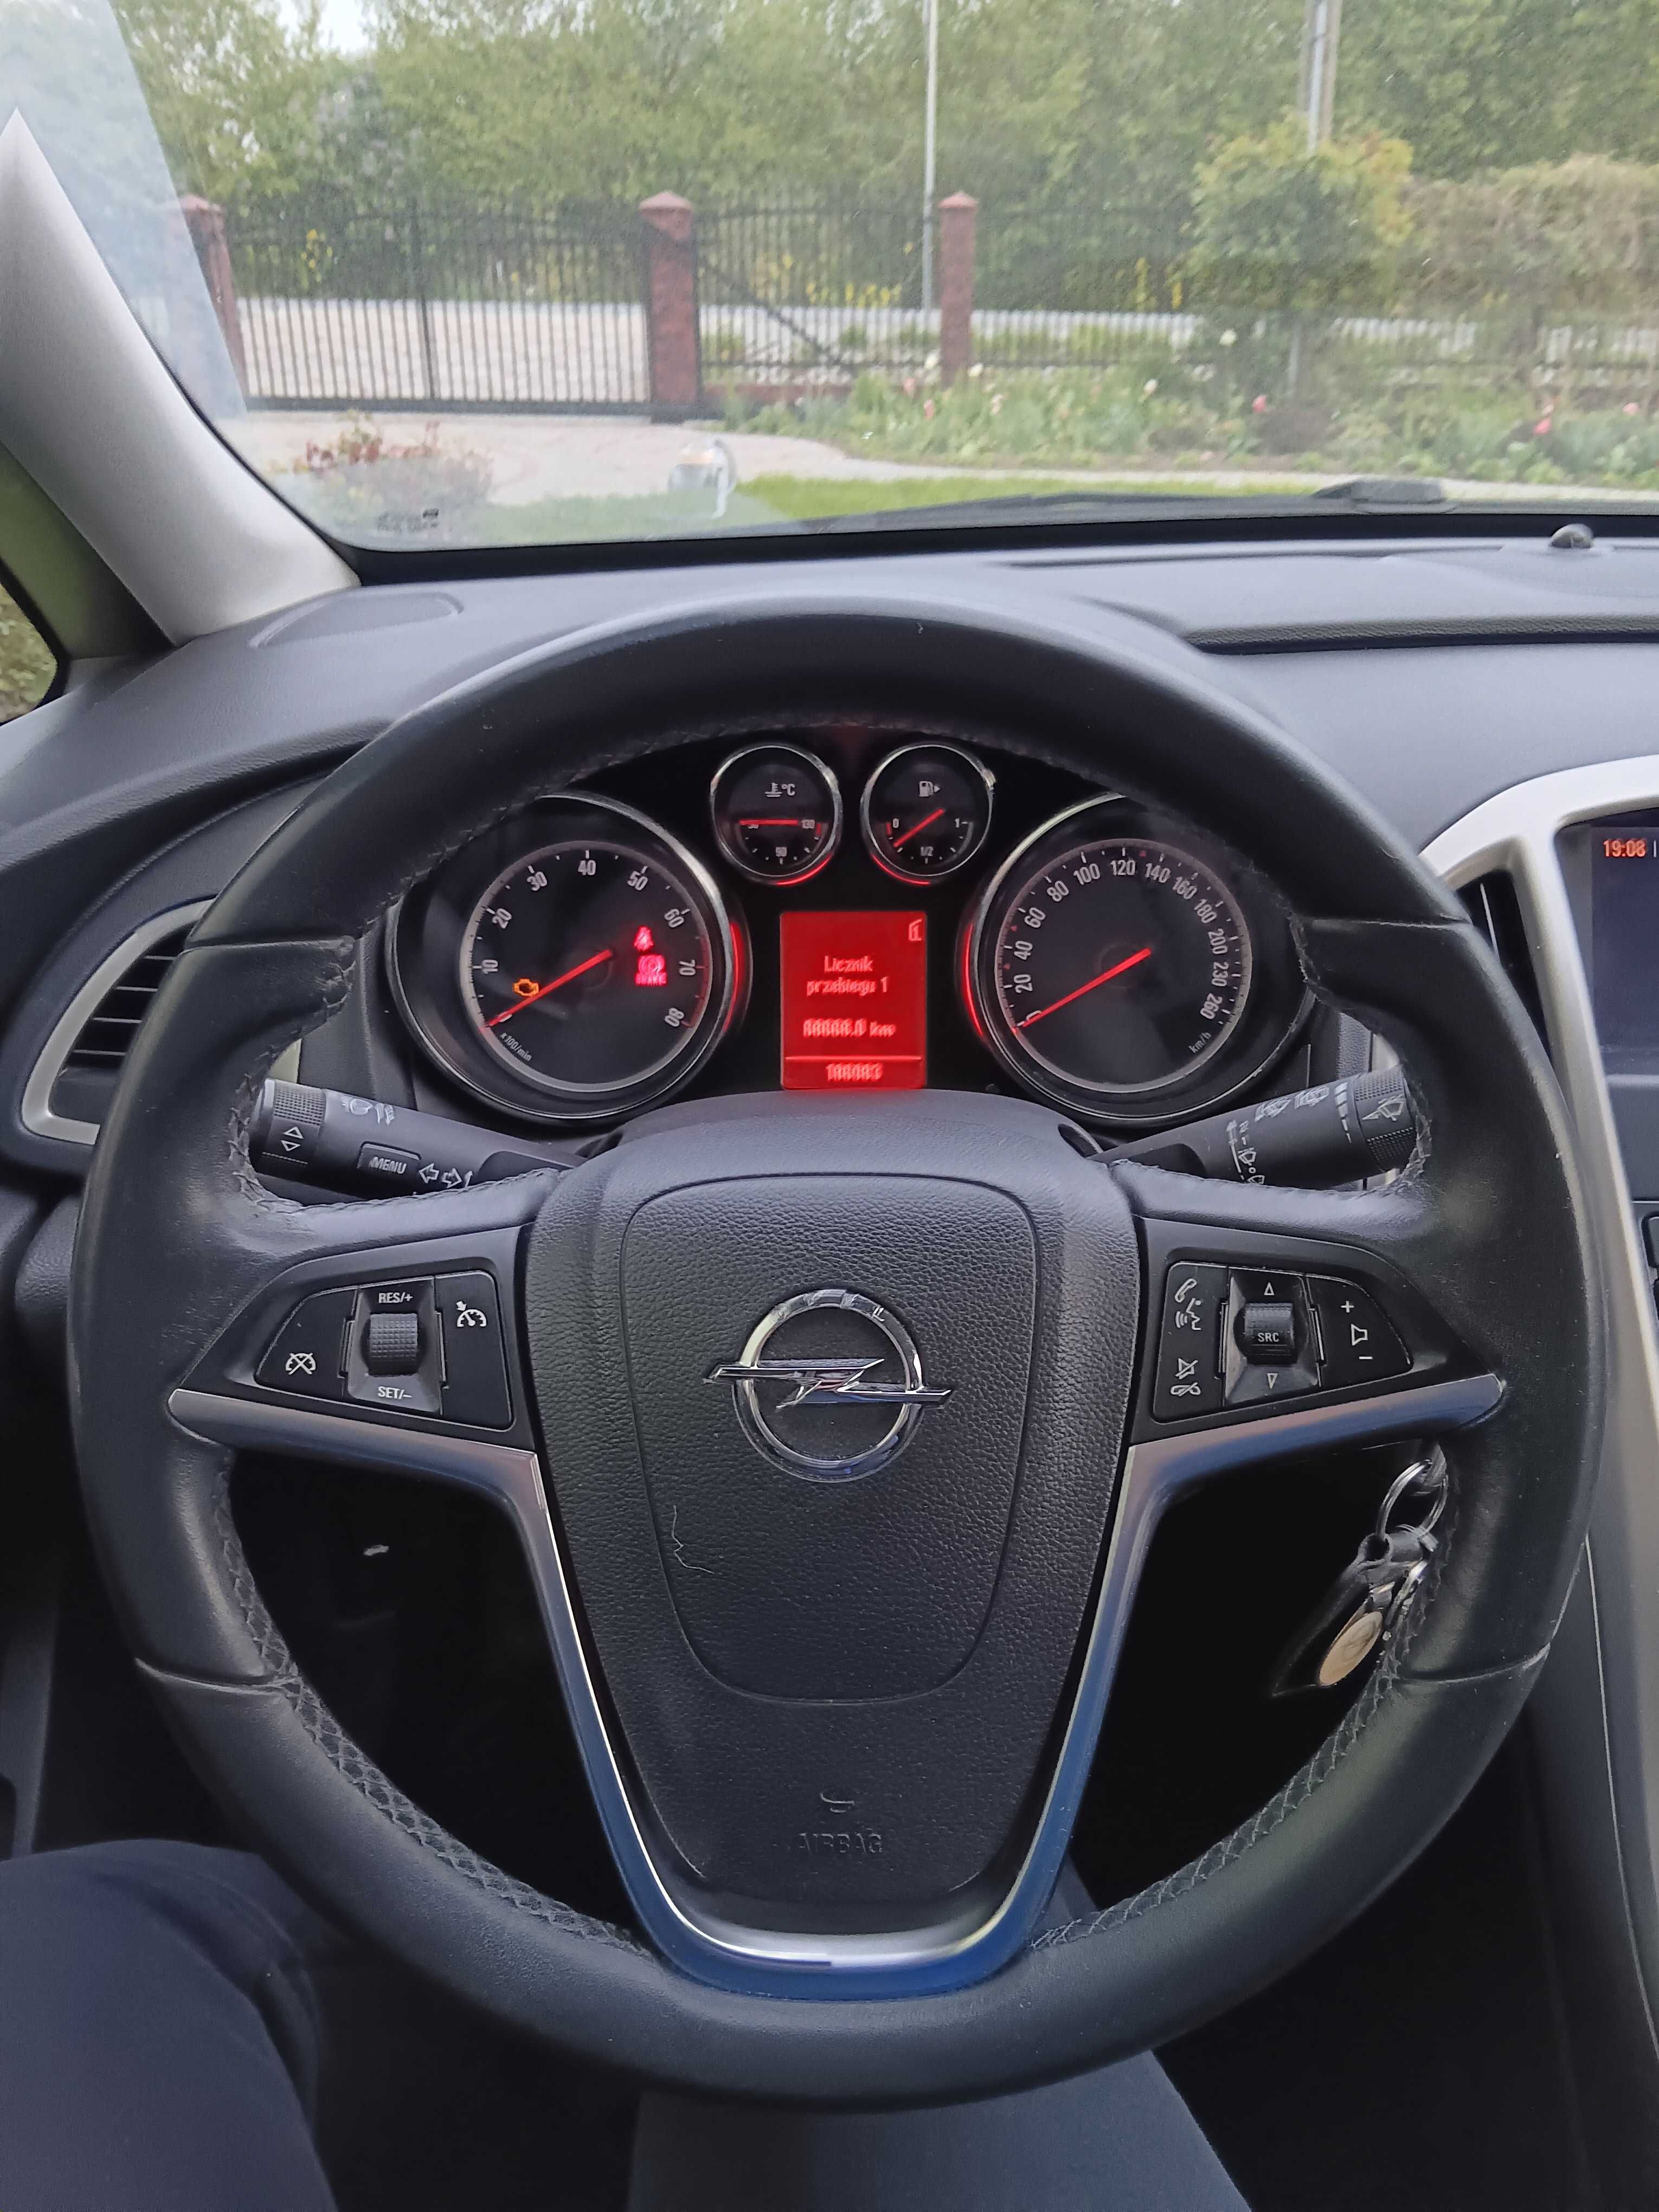 Opel Astra 1.6 benzyna+LPG instalacja 4-letnia, 2 kompl kół, 187 000km